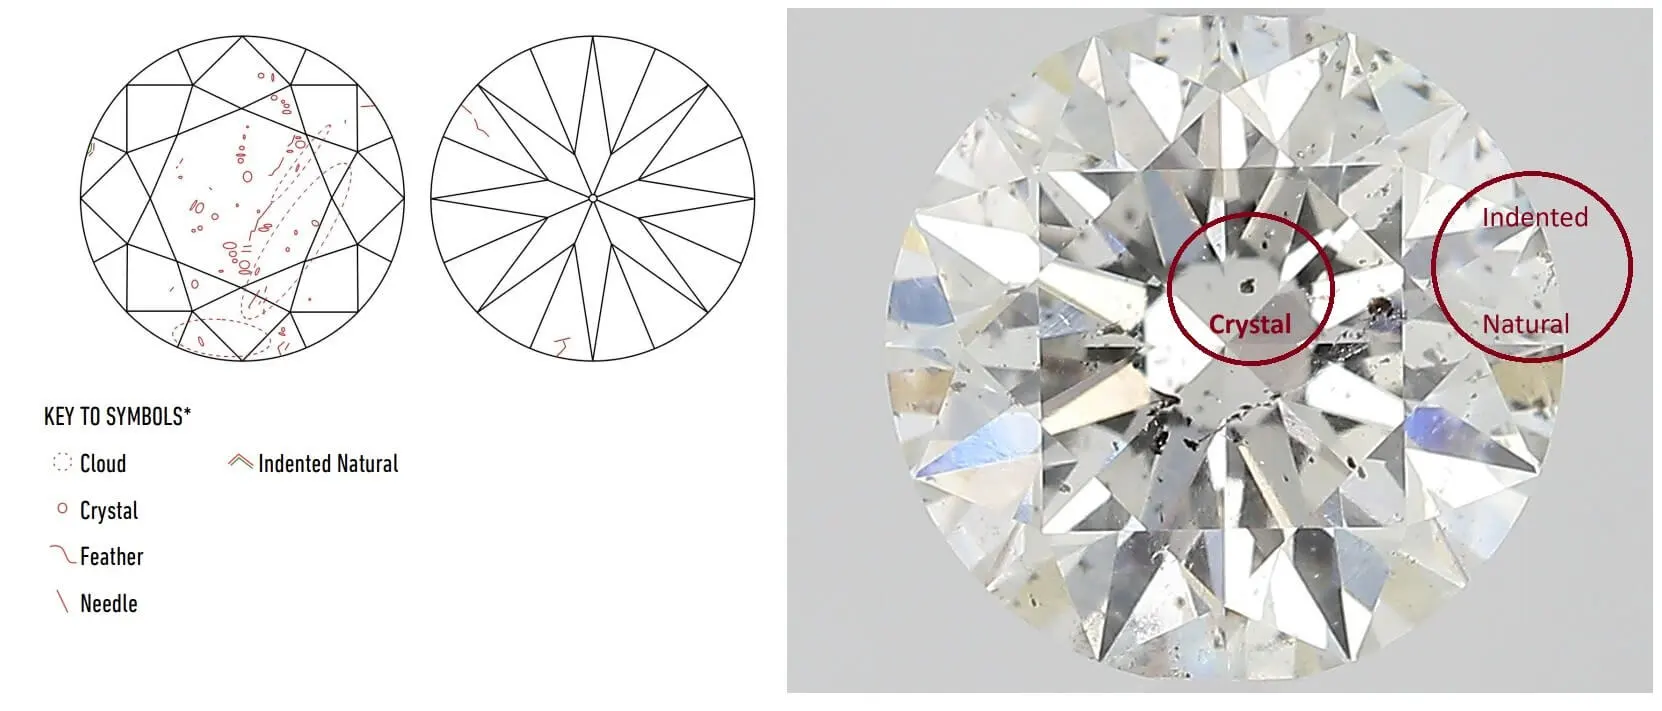 Crystal diamond inclusion clarity